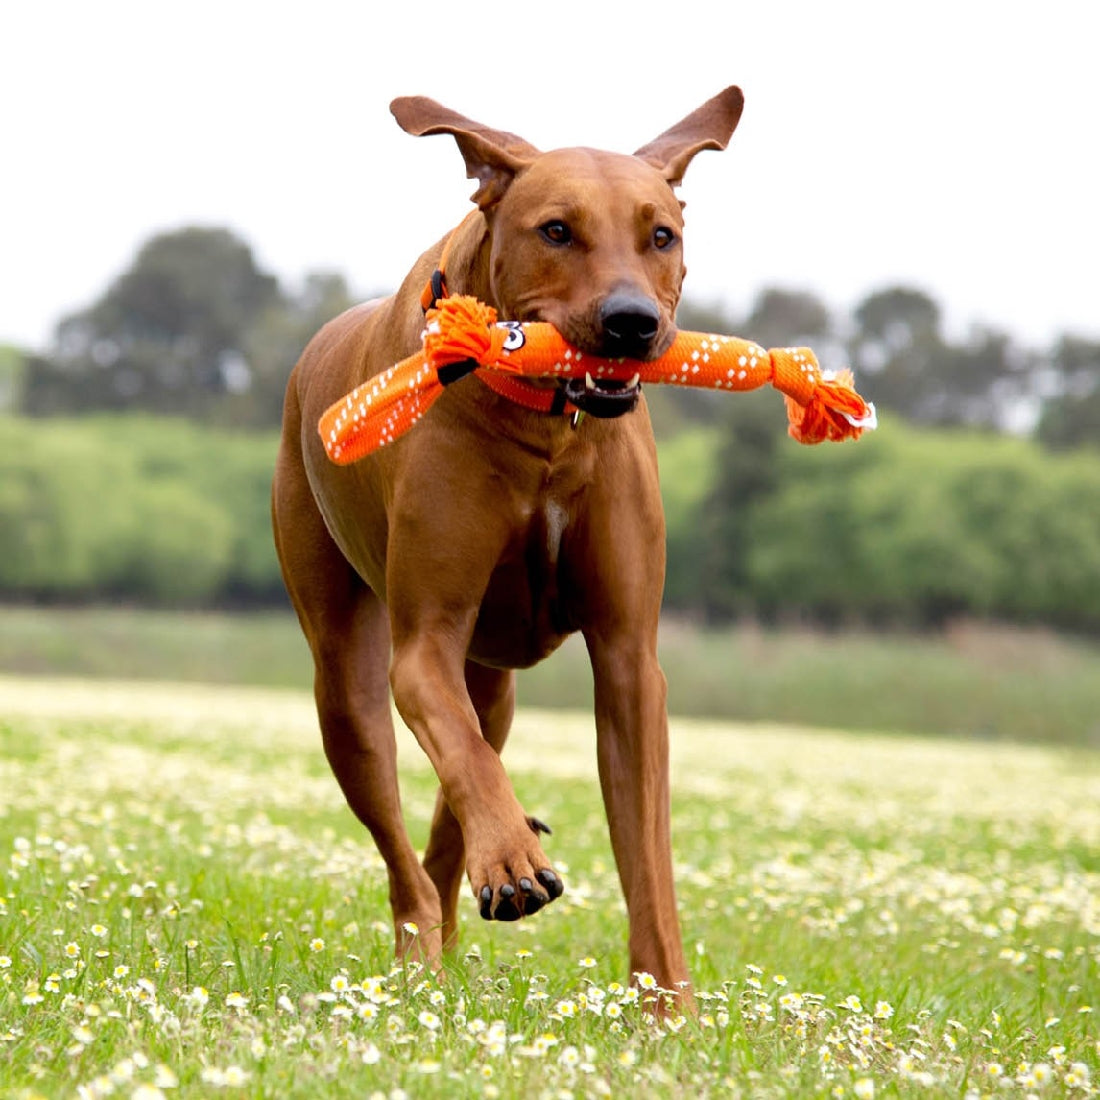 Brown dog carrying orange Rogz toy in flowery field.